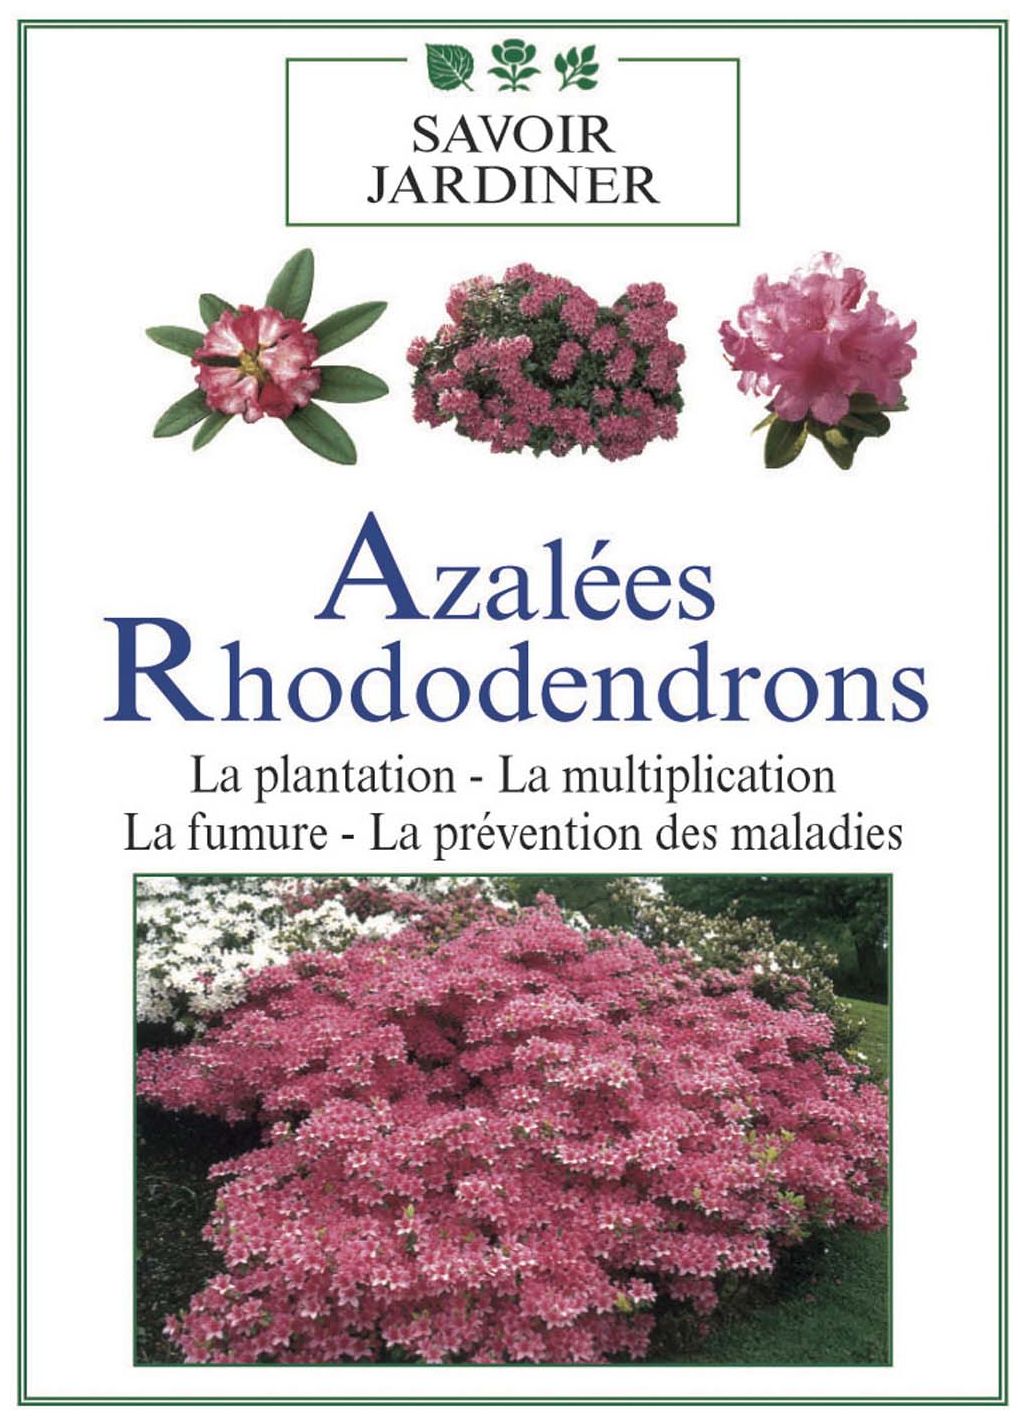 Azalées Et Rhododendrons [DVD]